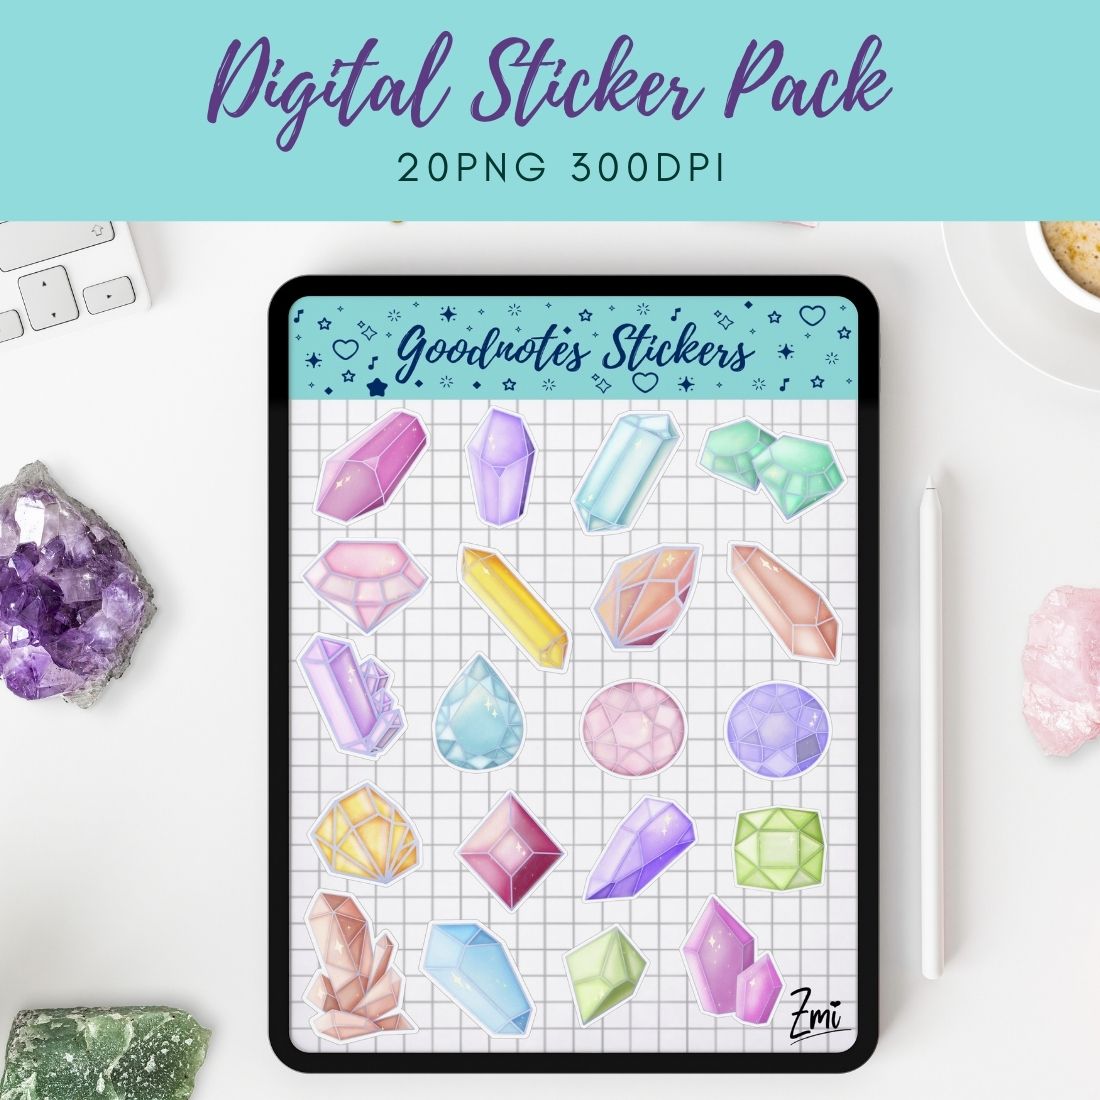 Crystals and gemstones digital sticker pack.